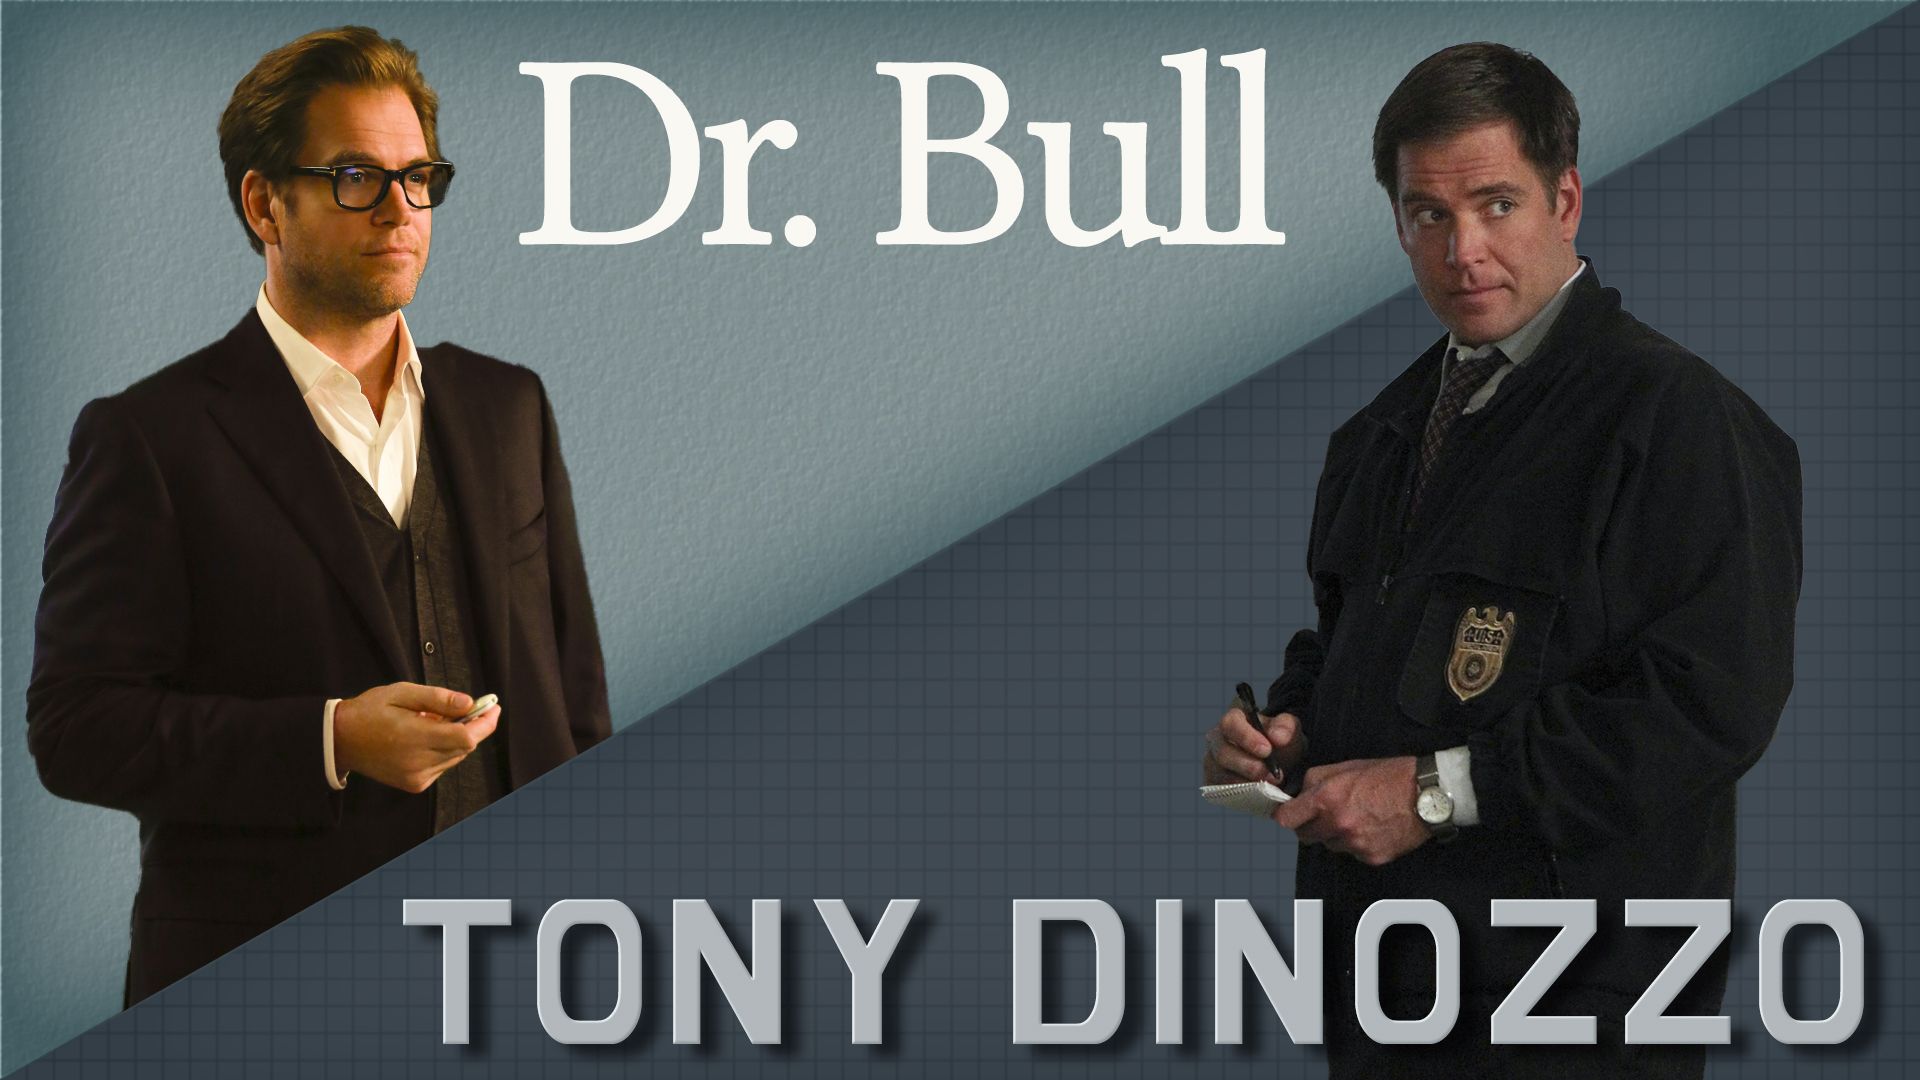 Who Said It: Dr. Bull Or Tony DiNozzo?